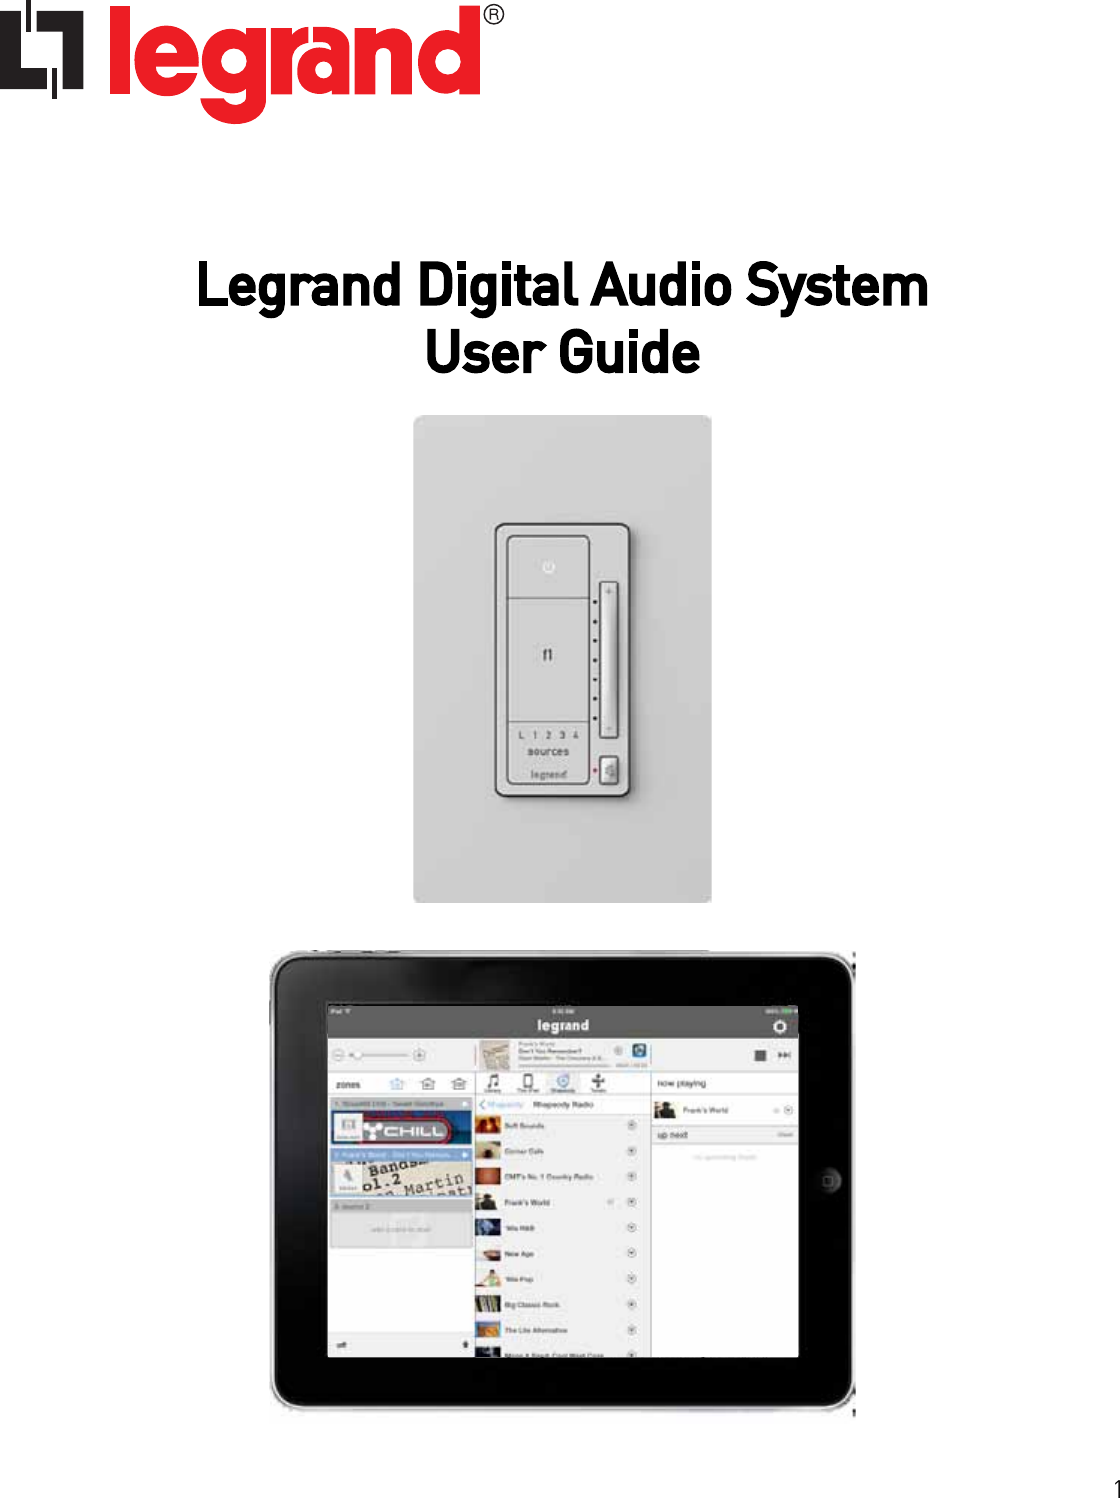 1Legrand Digital Audio System User Guide